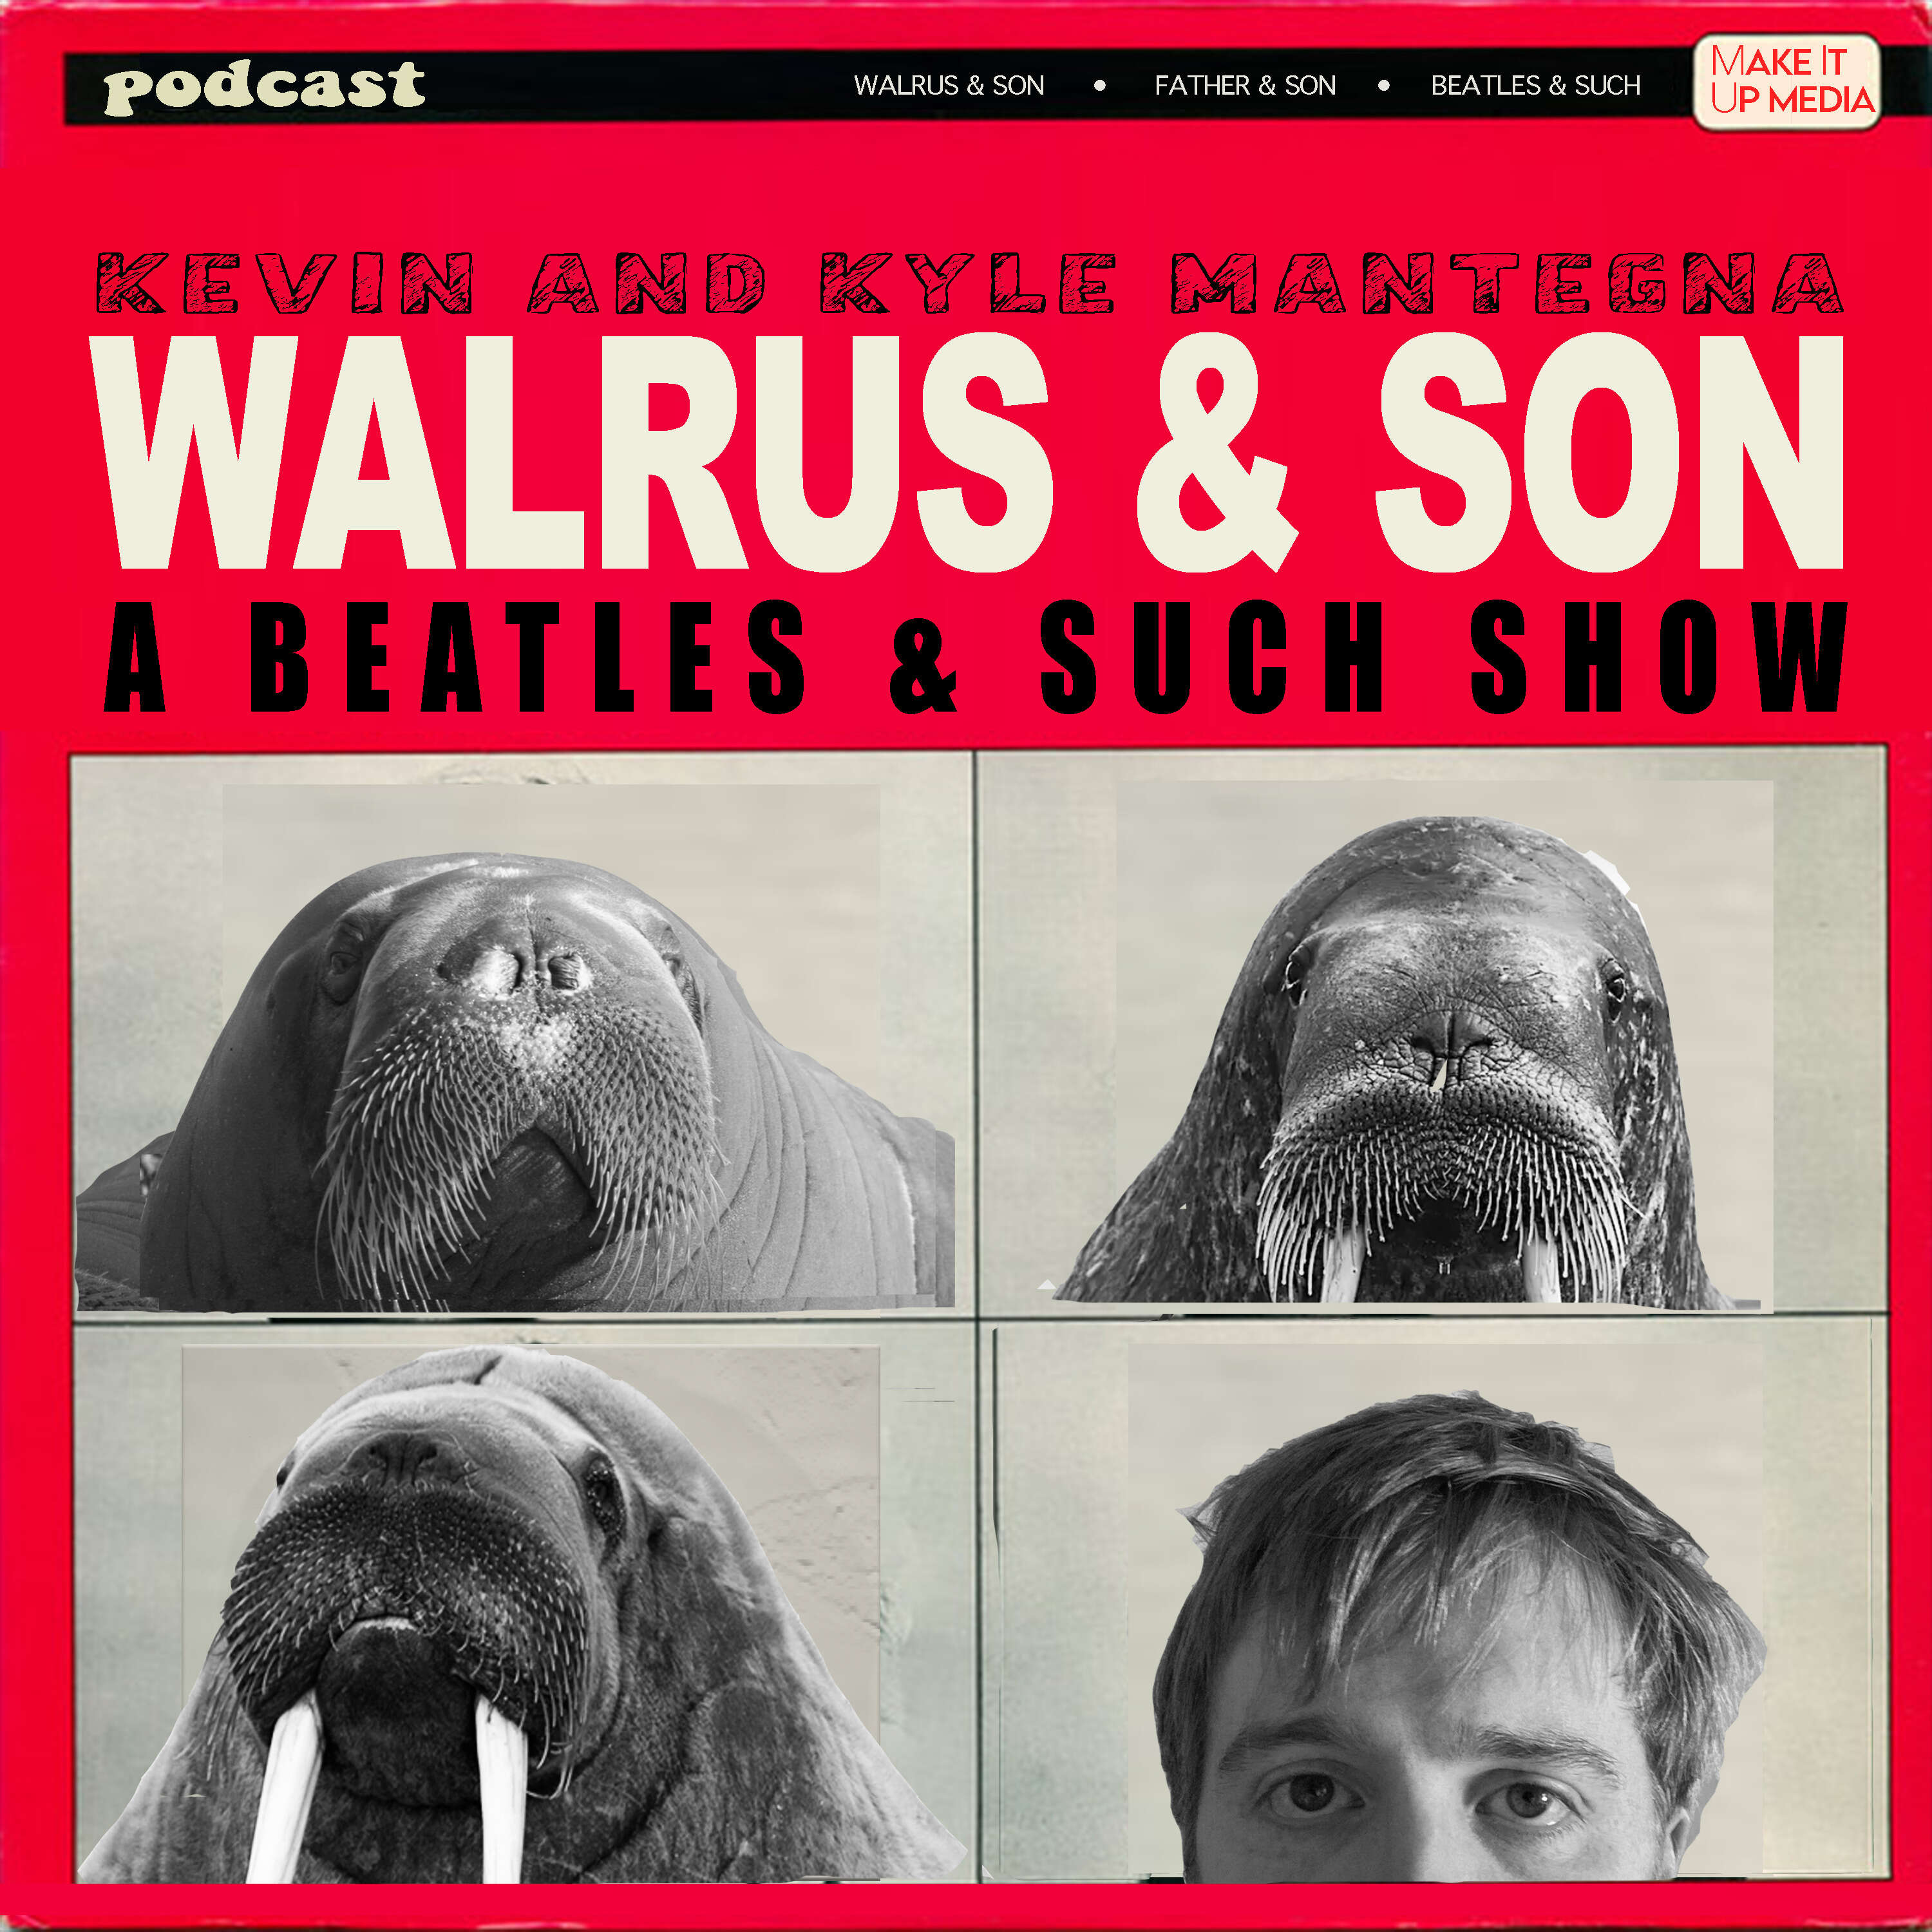 Artwork for Walrus & Son